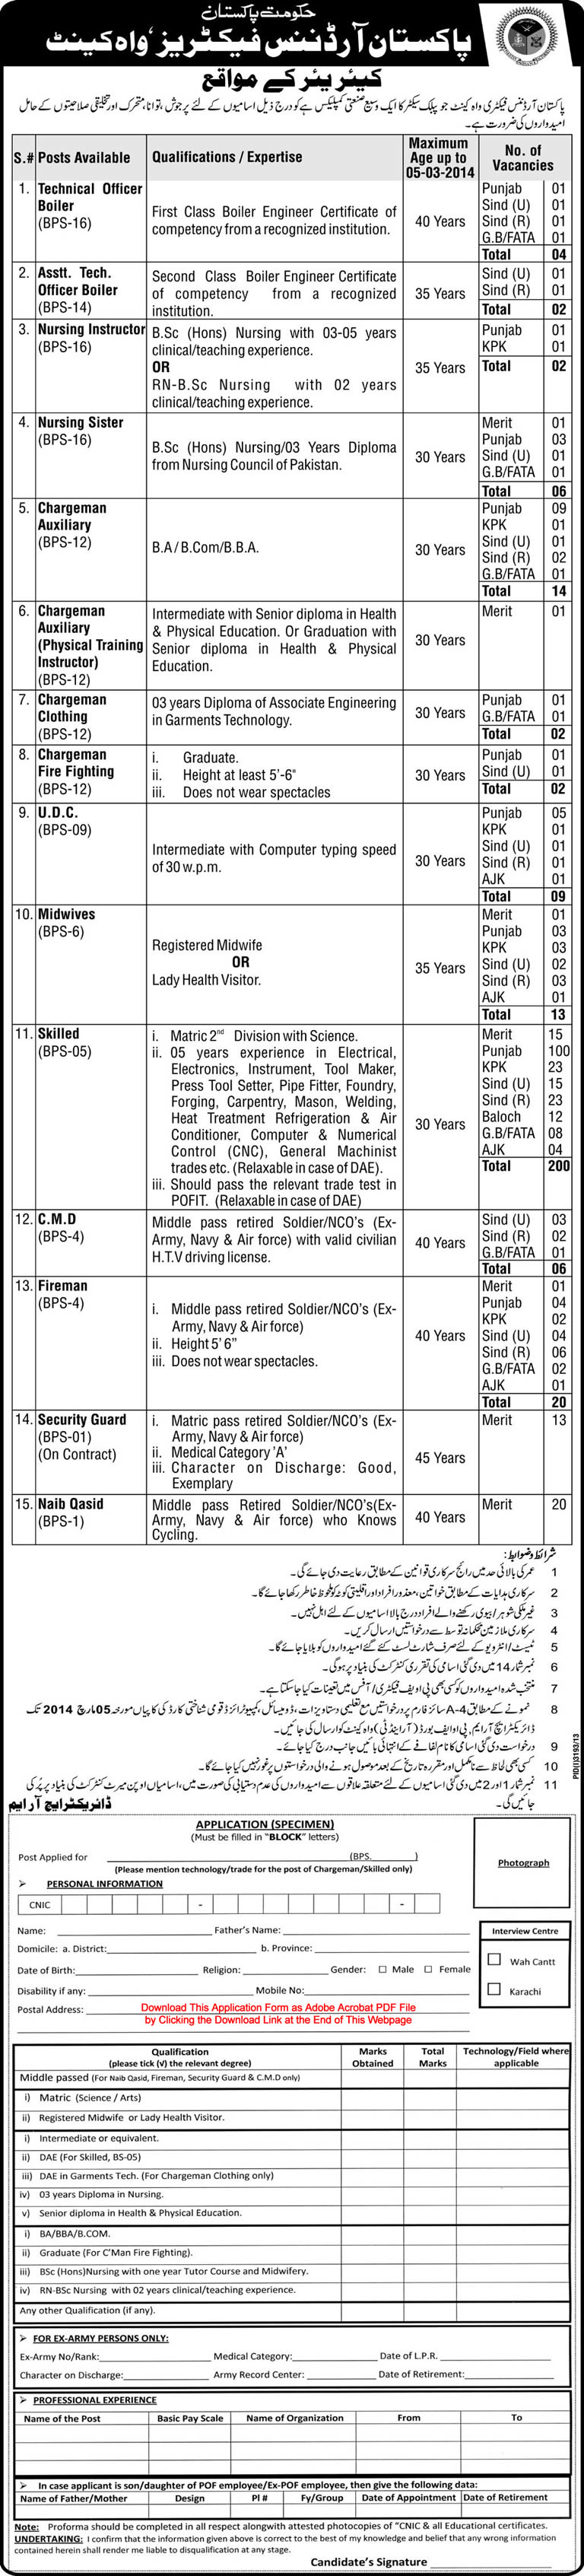 Pakistan Ordnance Factories Wah Jobs February 2014 Application Form Download